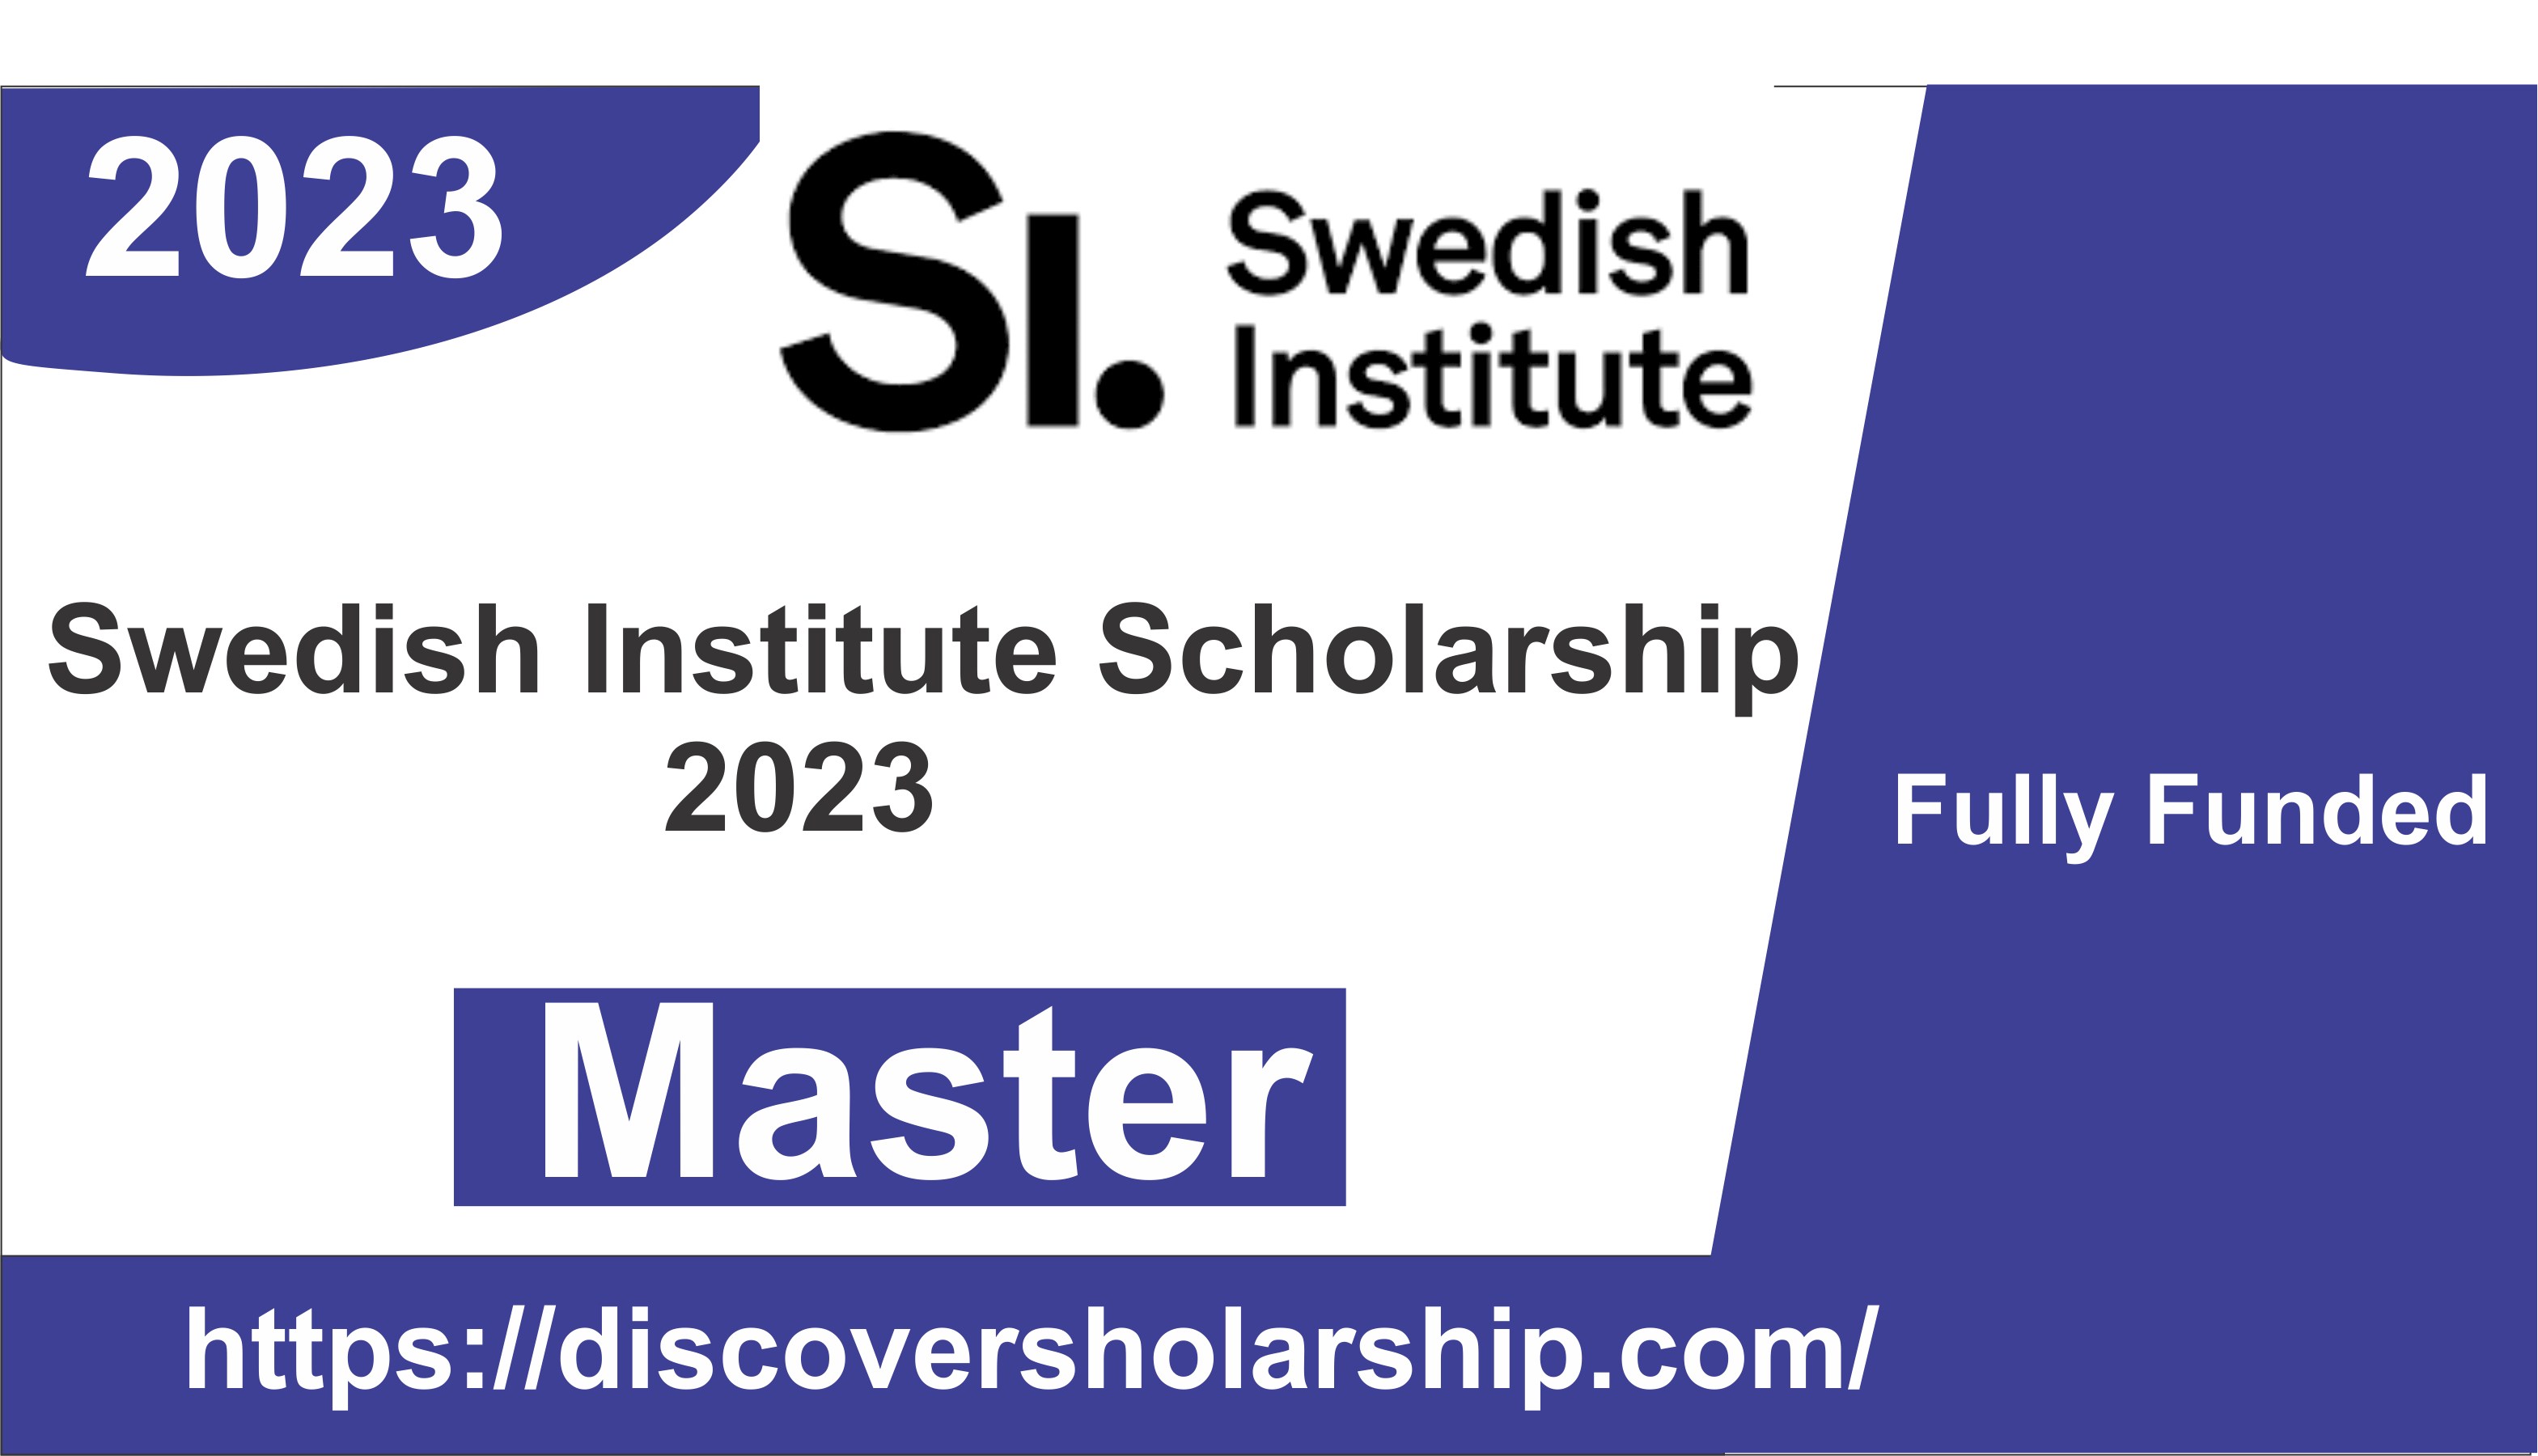 Swedish Institute Scholarship 2023 for Master’s Degree [Fully Funded]